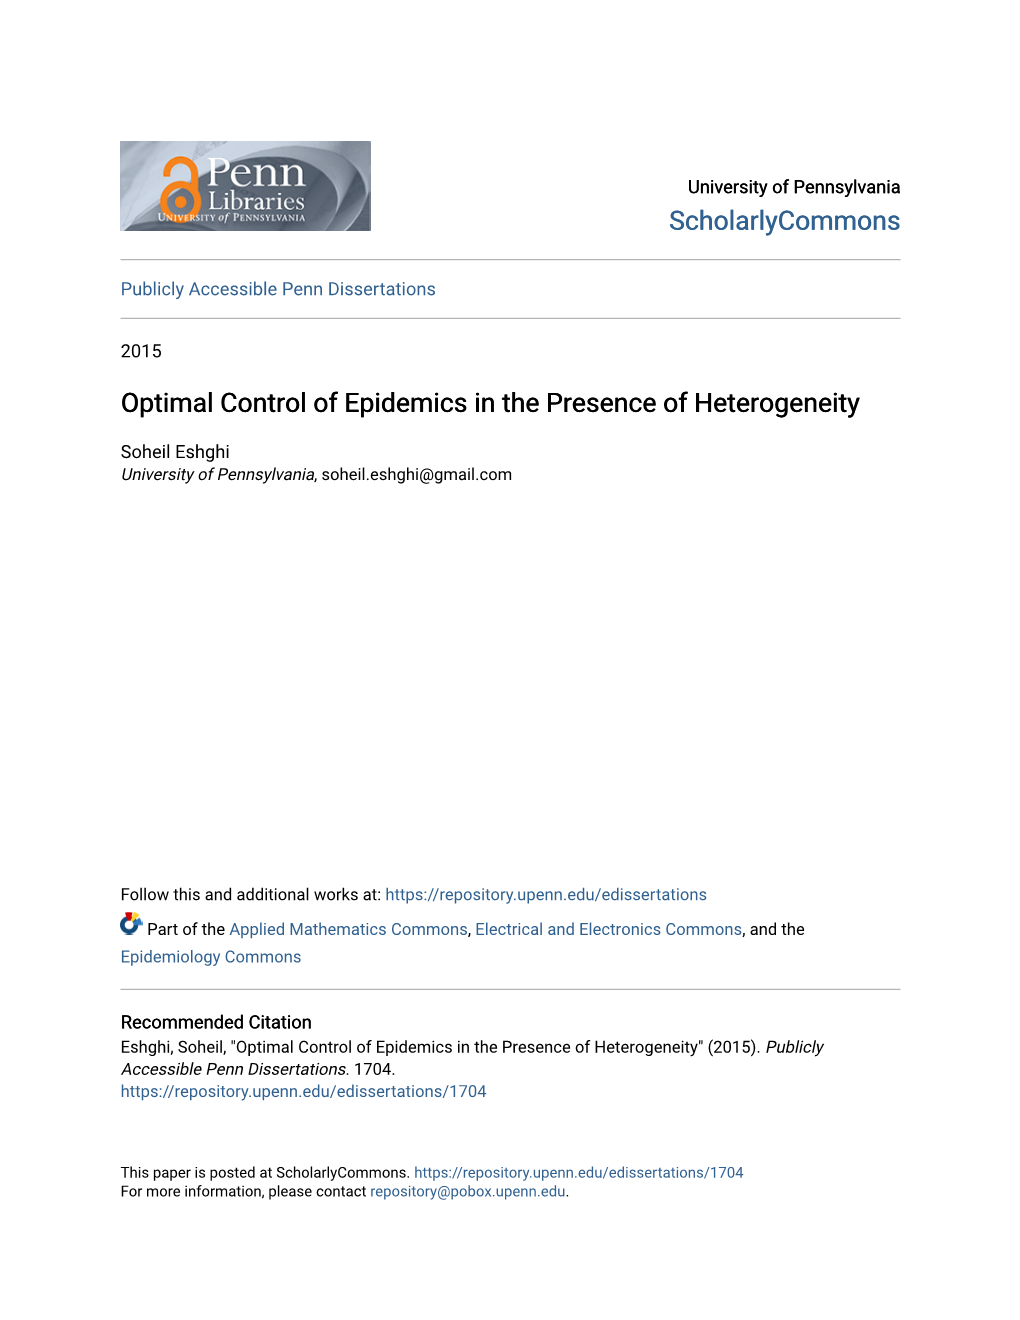 Optimal Control of Epidemics in the Presence of Heterogeneity